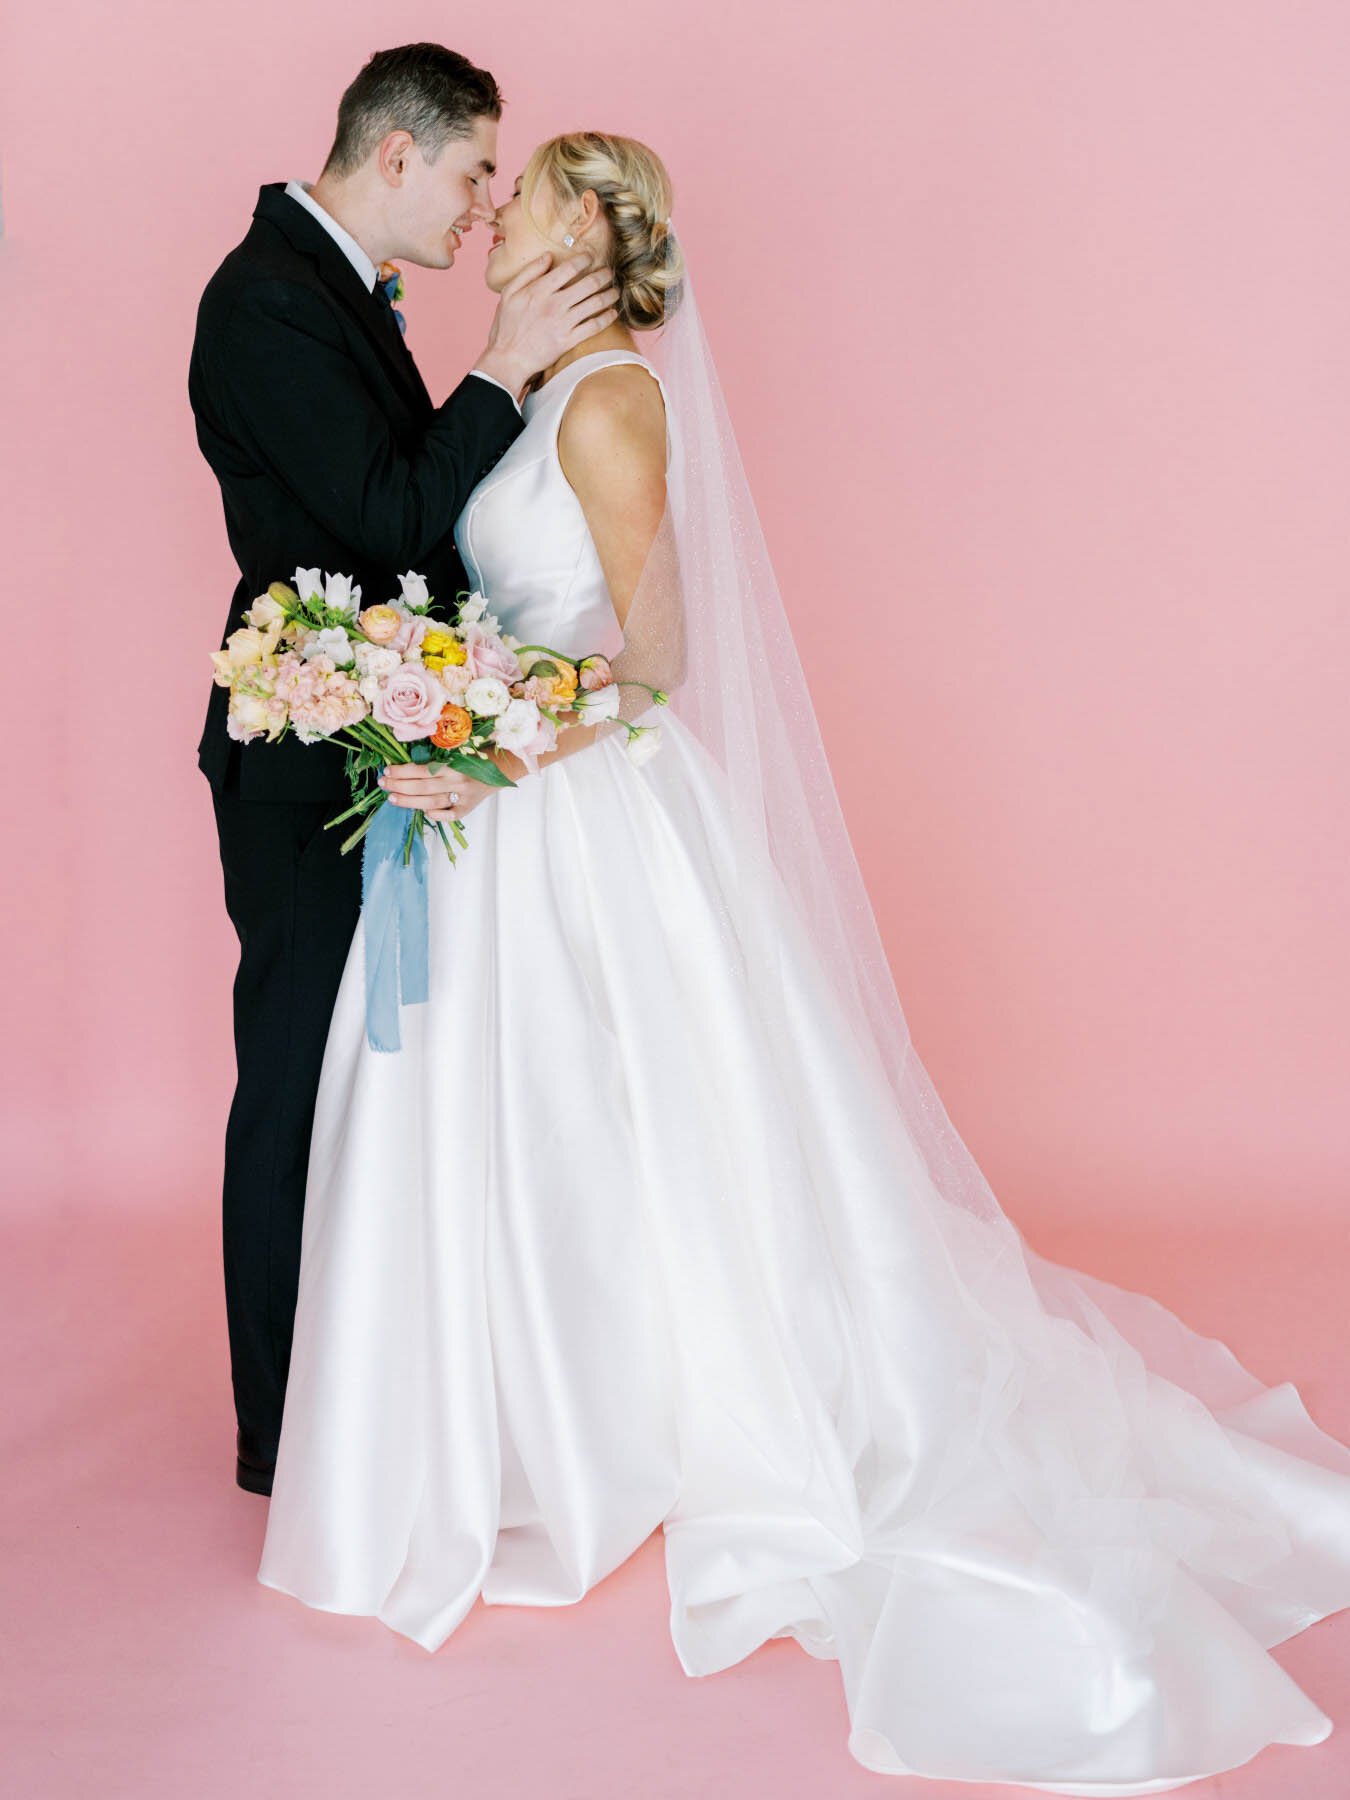 Lynchburg-wedding-weddingphotographer-film-atelier-mircowedding-love-lynchburgphotographer-25.jpg